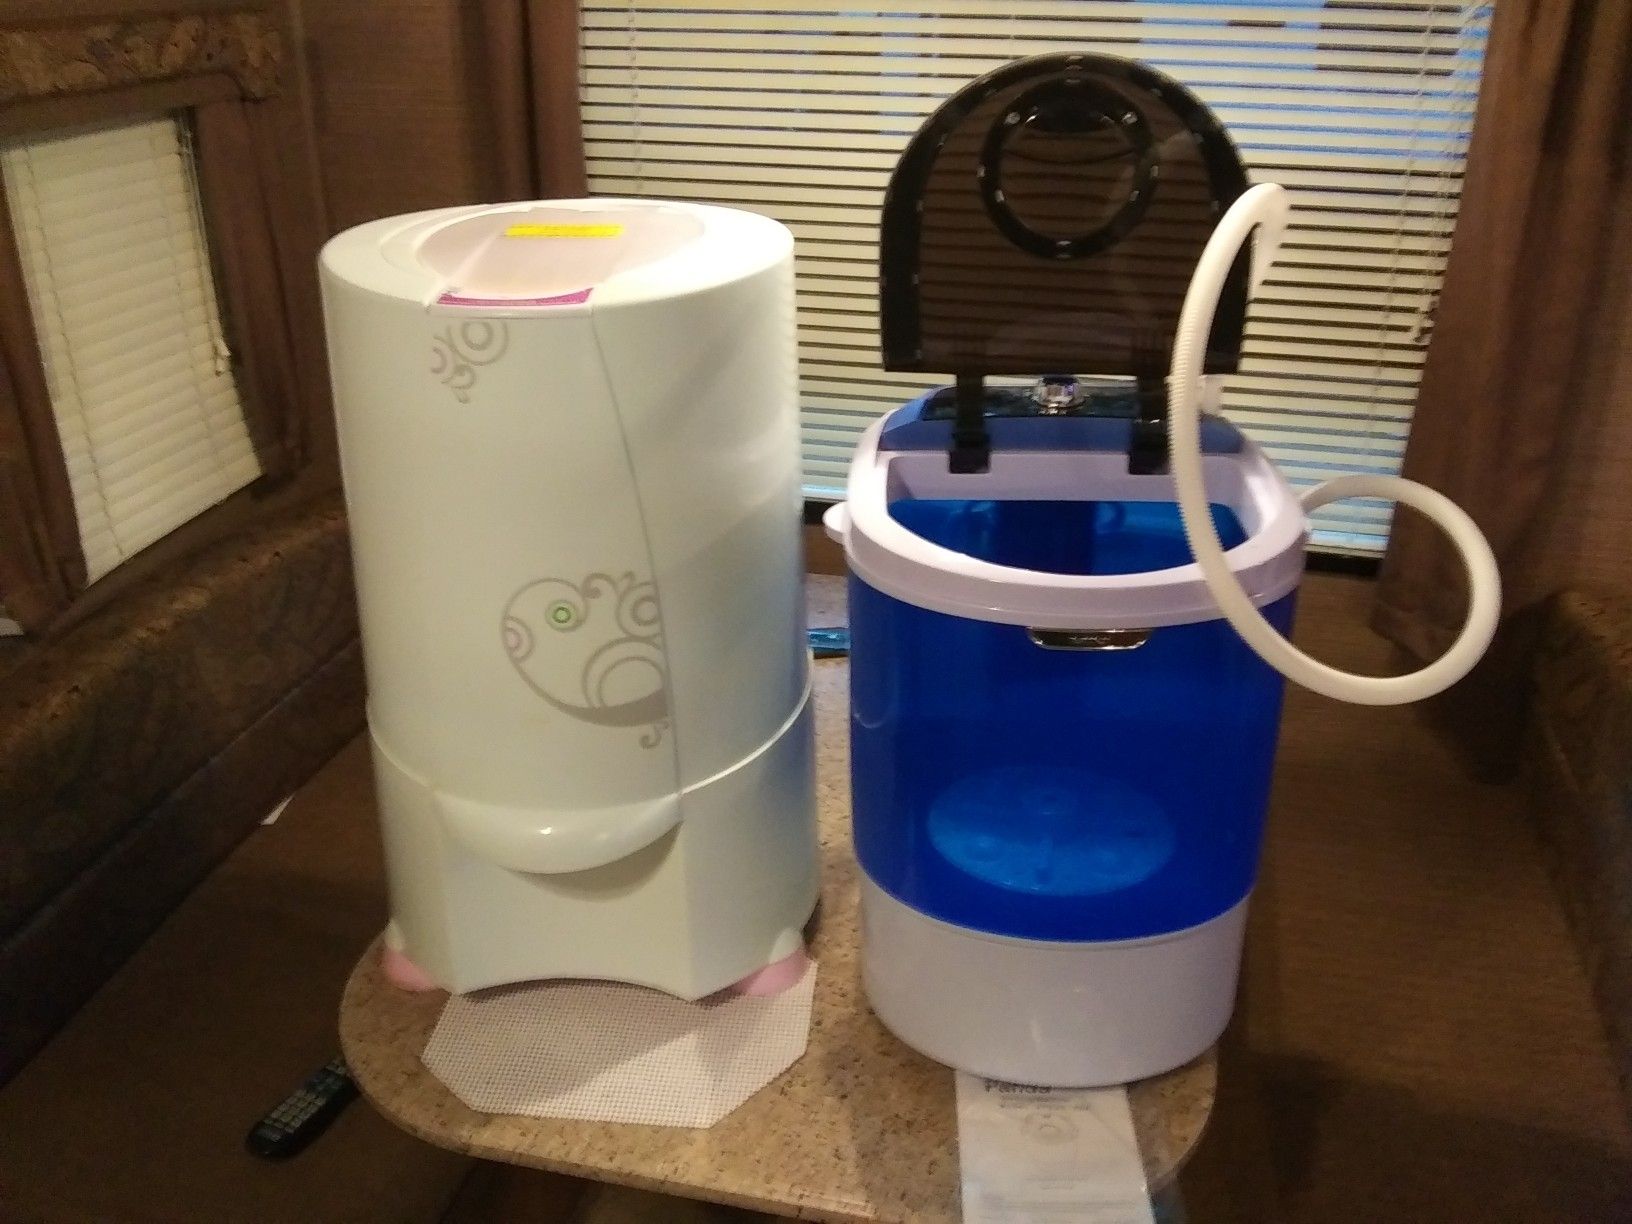 Panda xpb25-28a & the laundry laundry alternative inc. nina Soft Portable RV countertop washing machine and spin dryer